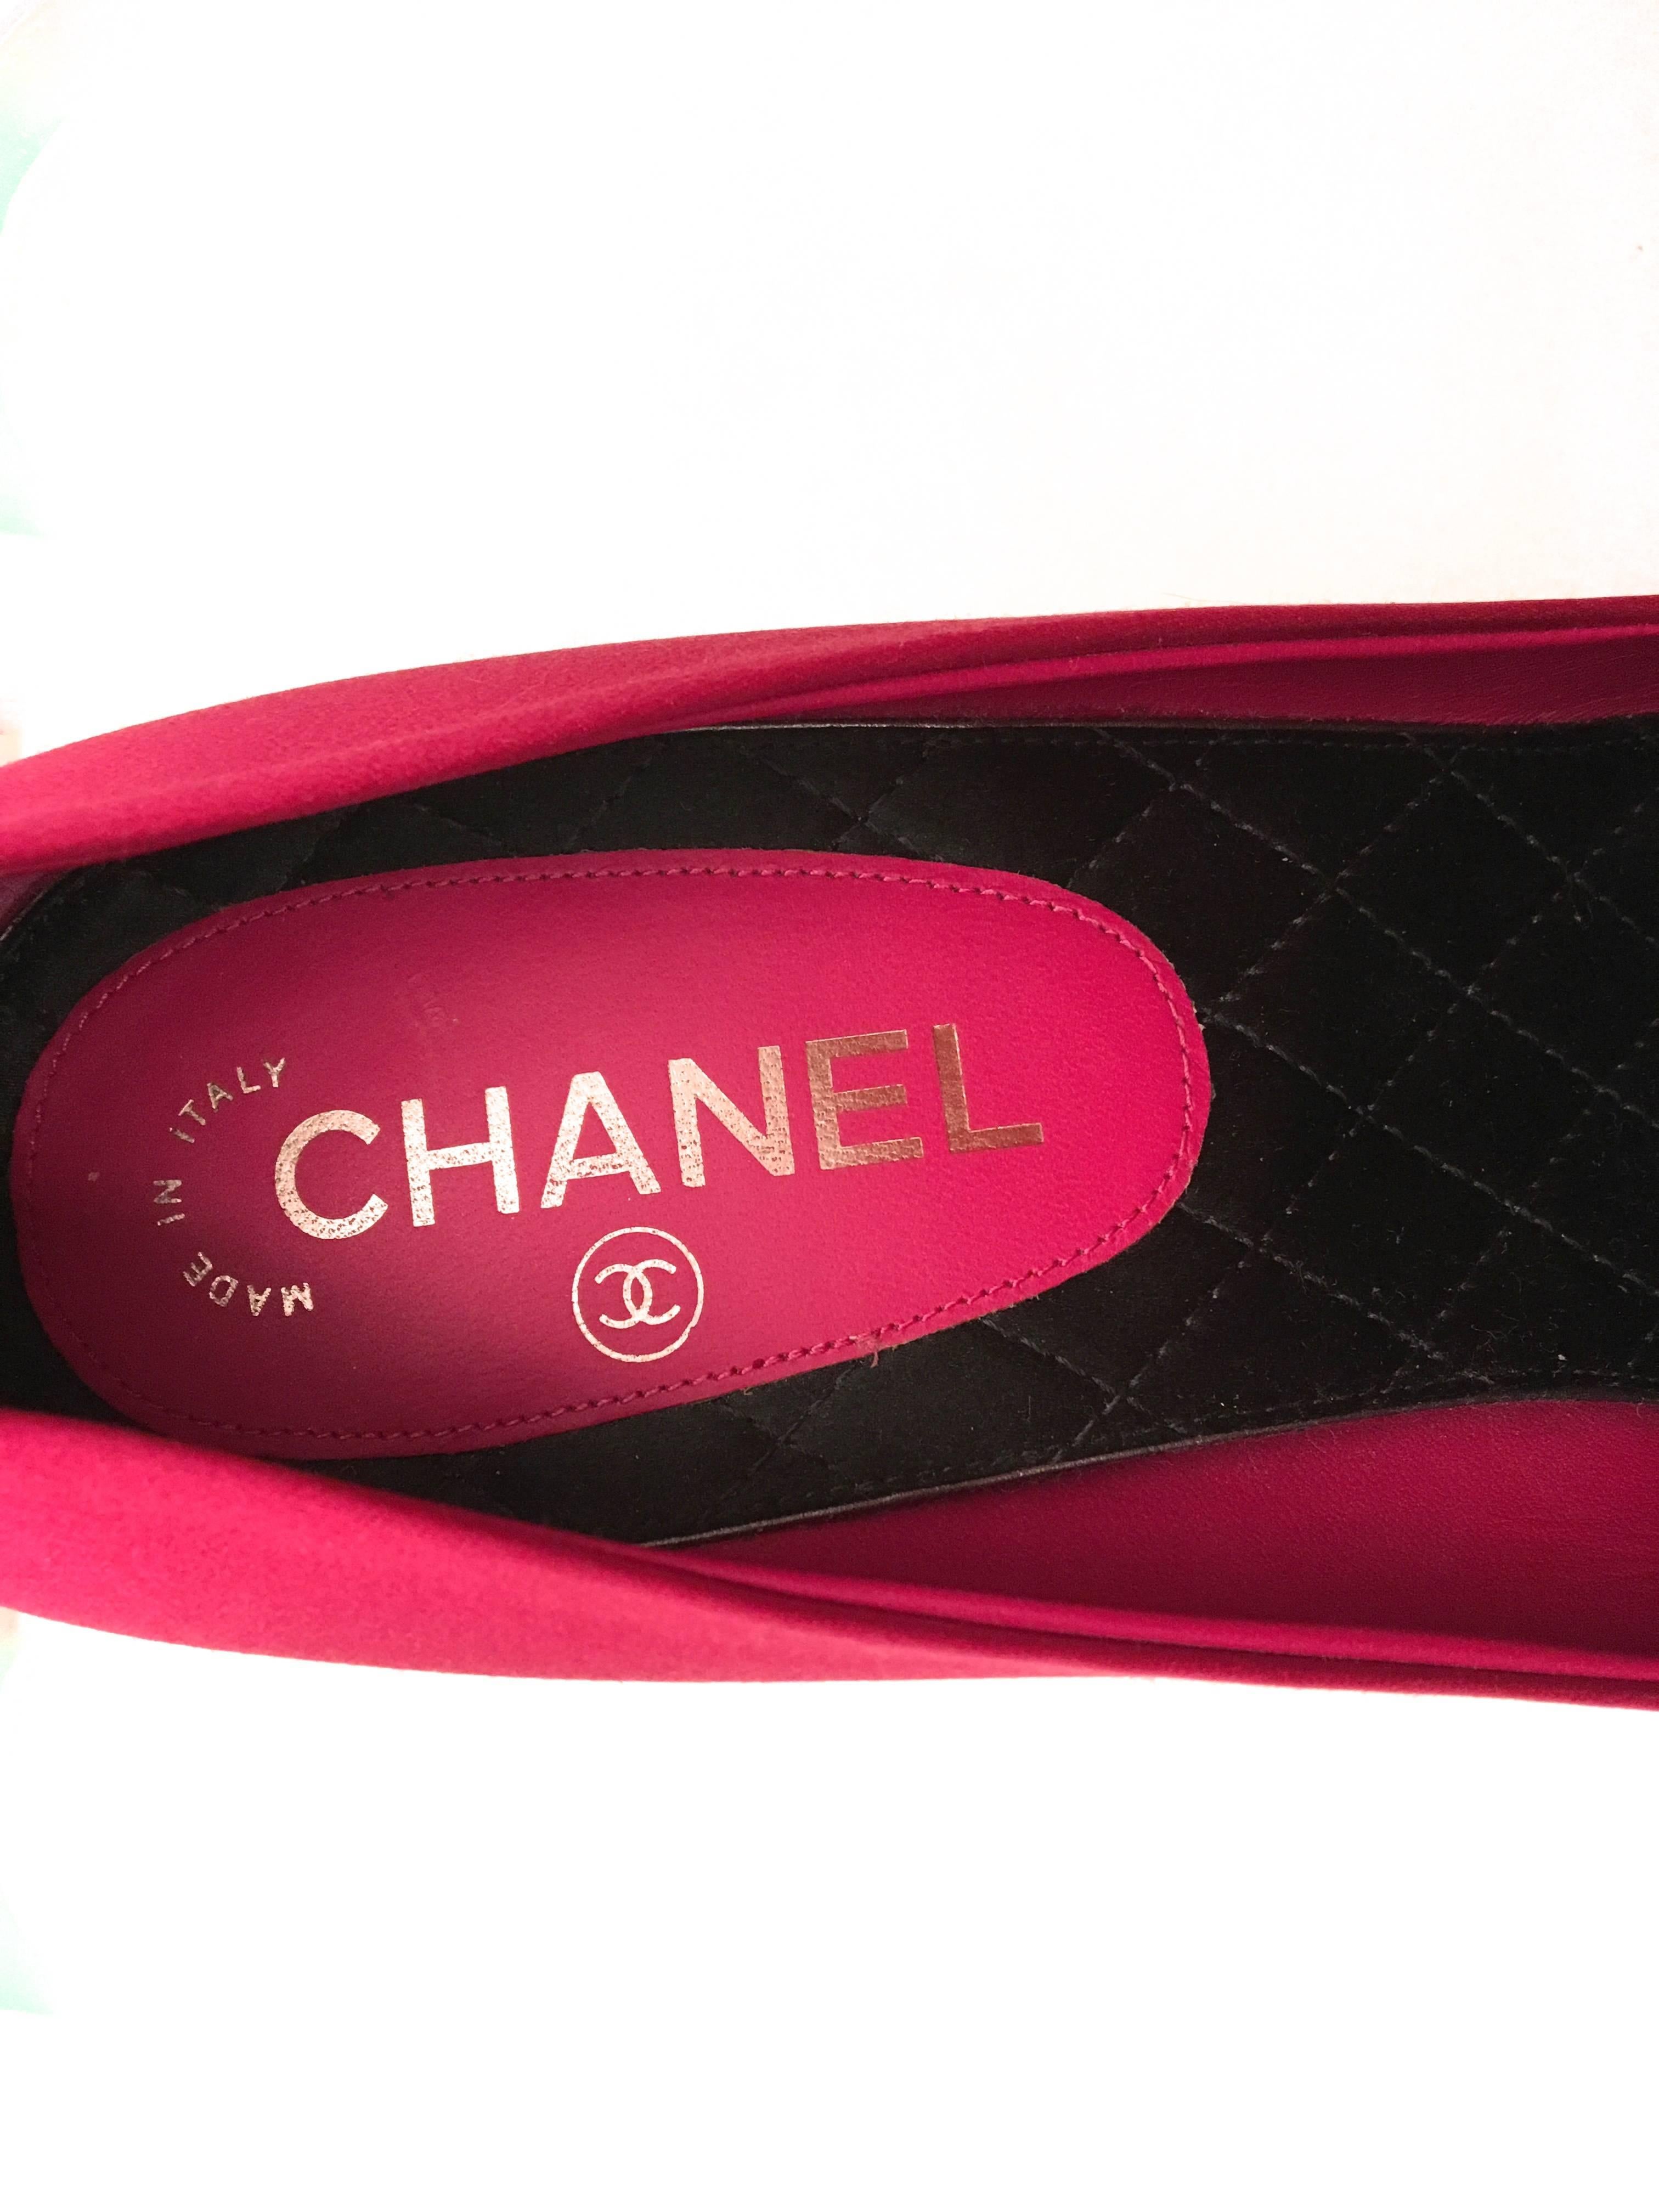 New Chanel Saint High Heel Dress Shoes - Size 41 4